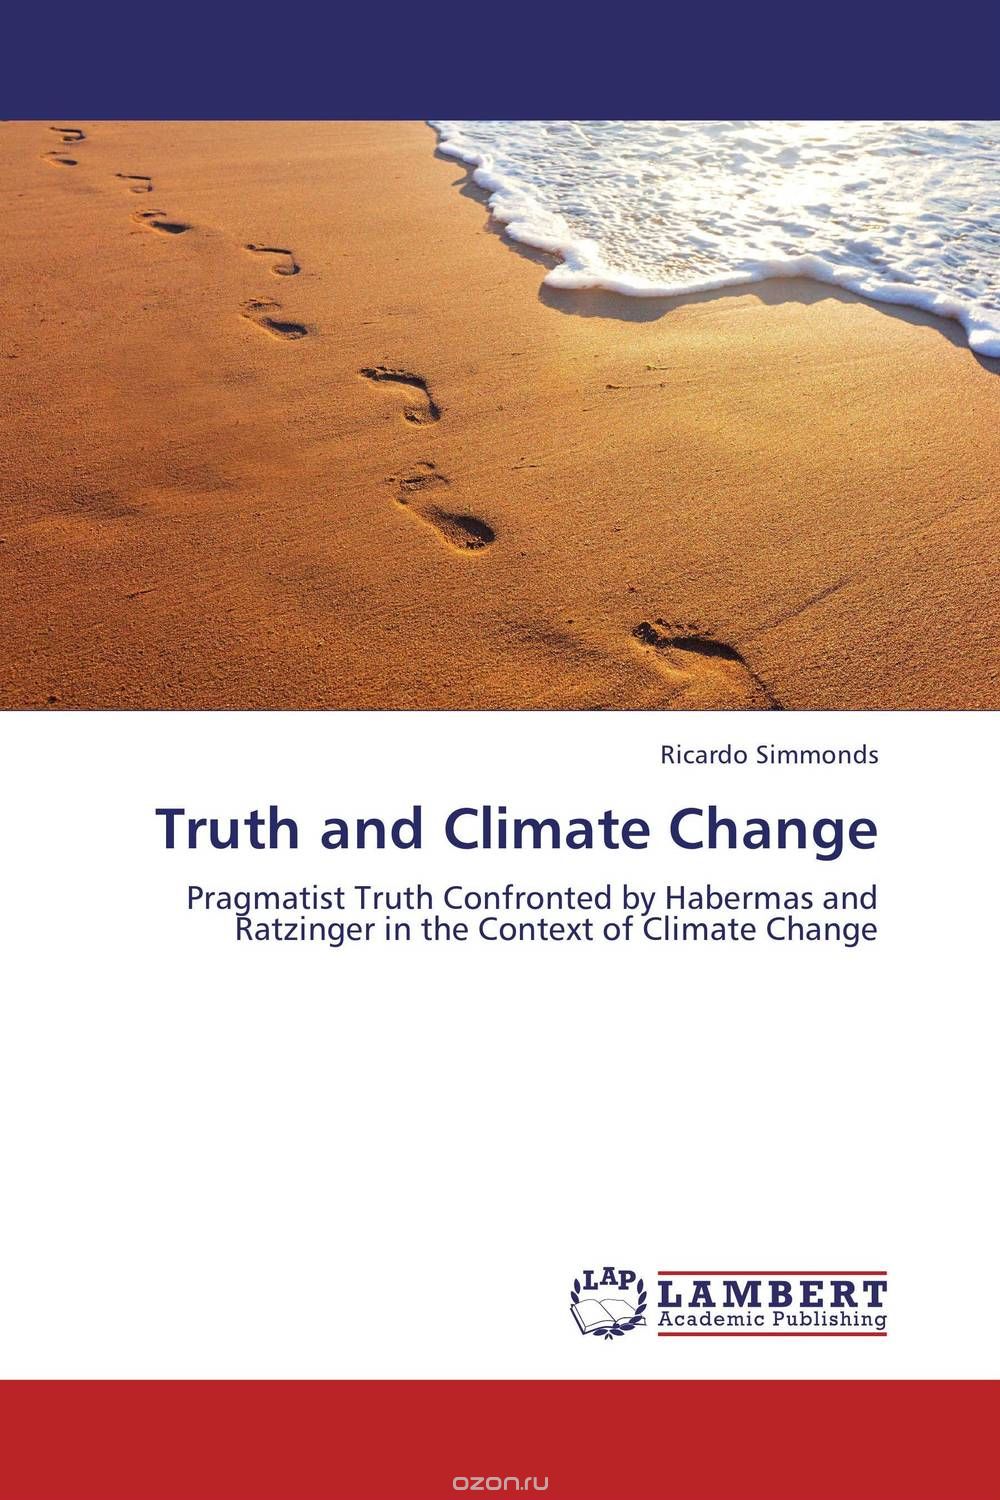 Скачать книгу "Truth and Climate Change"